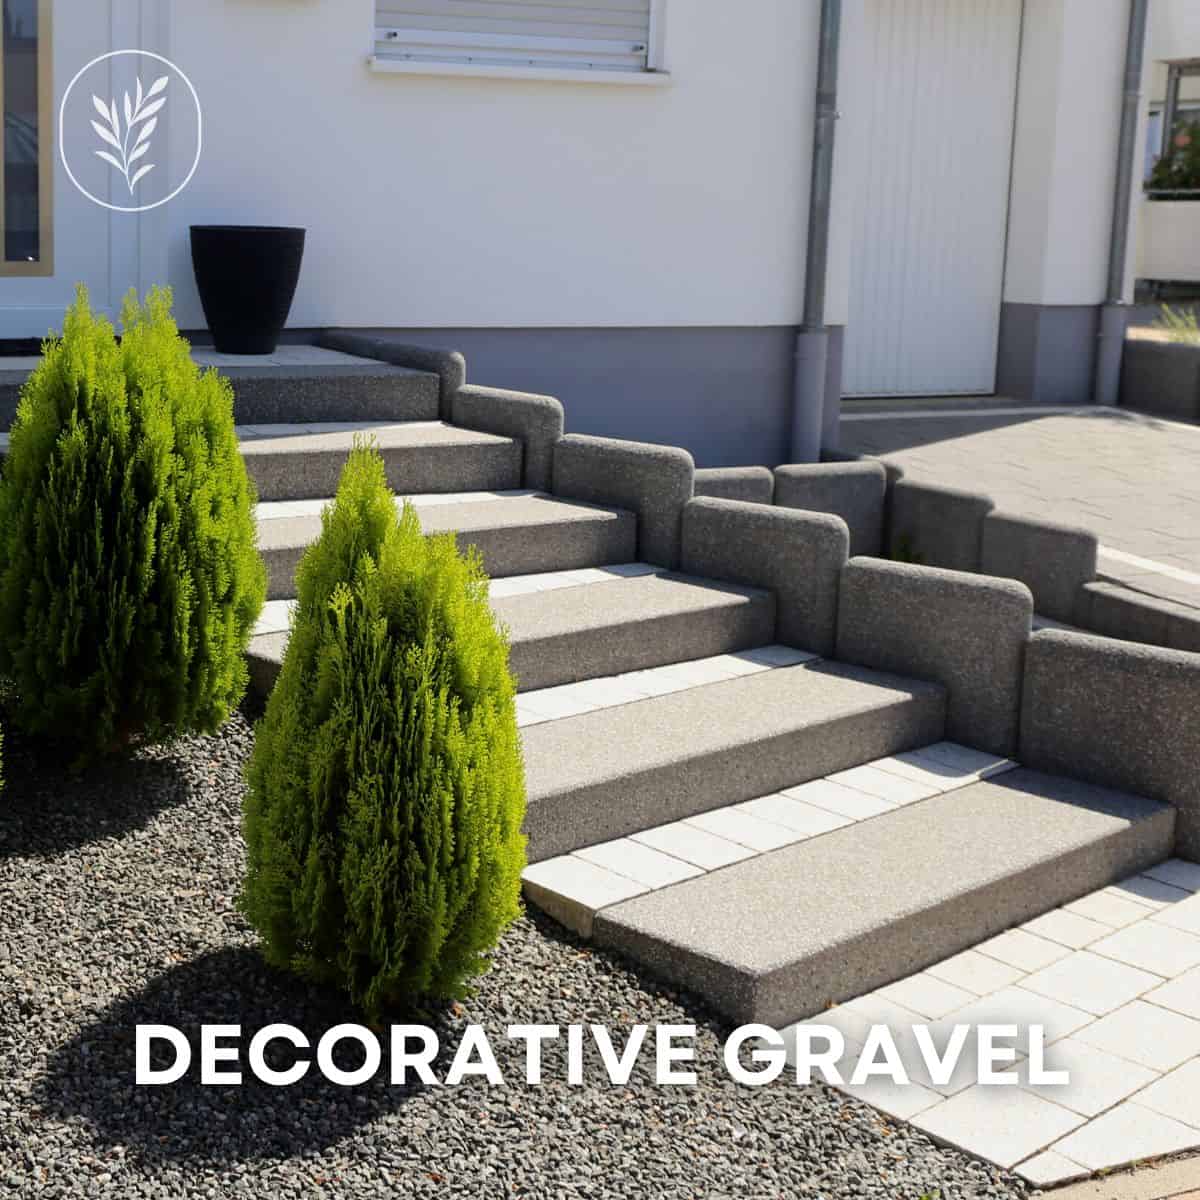 Decorative gravel via @home4theharvest